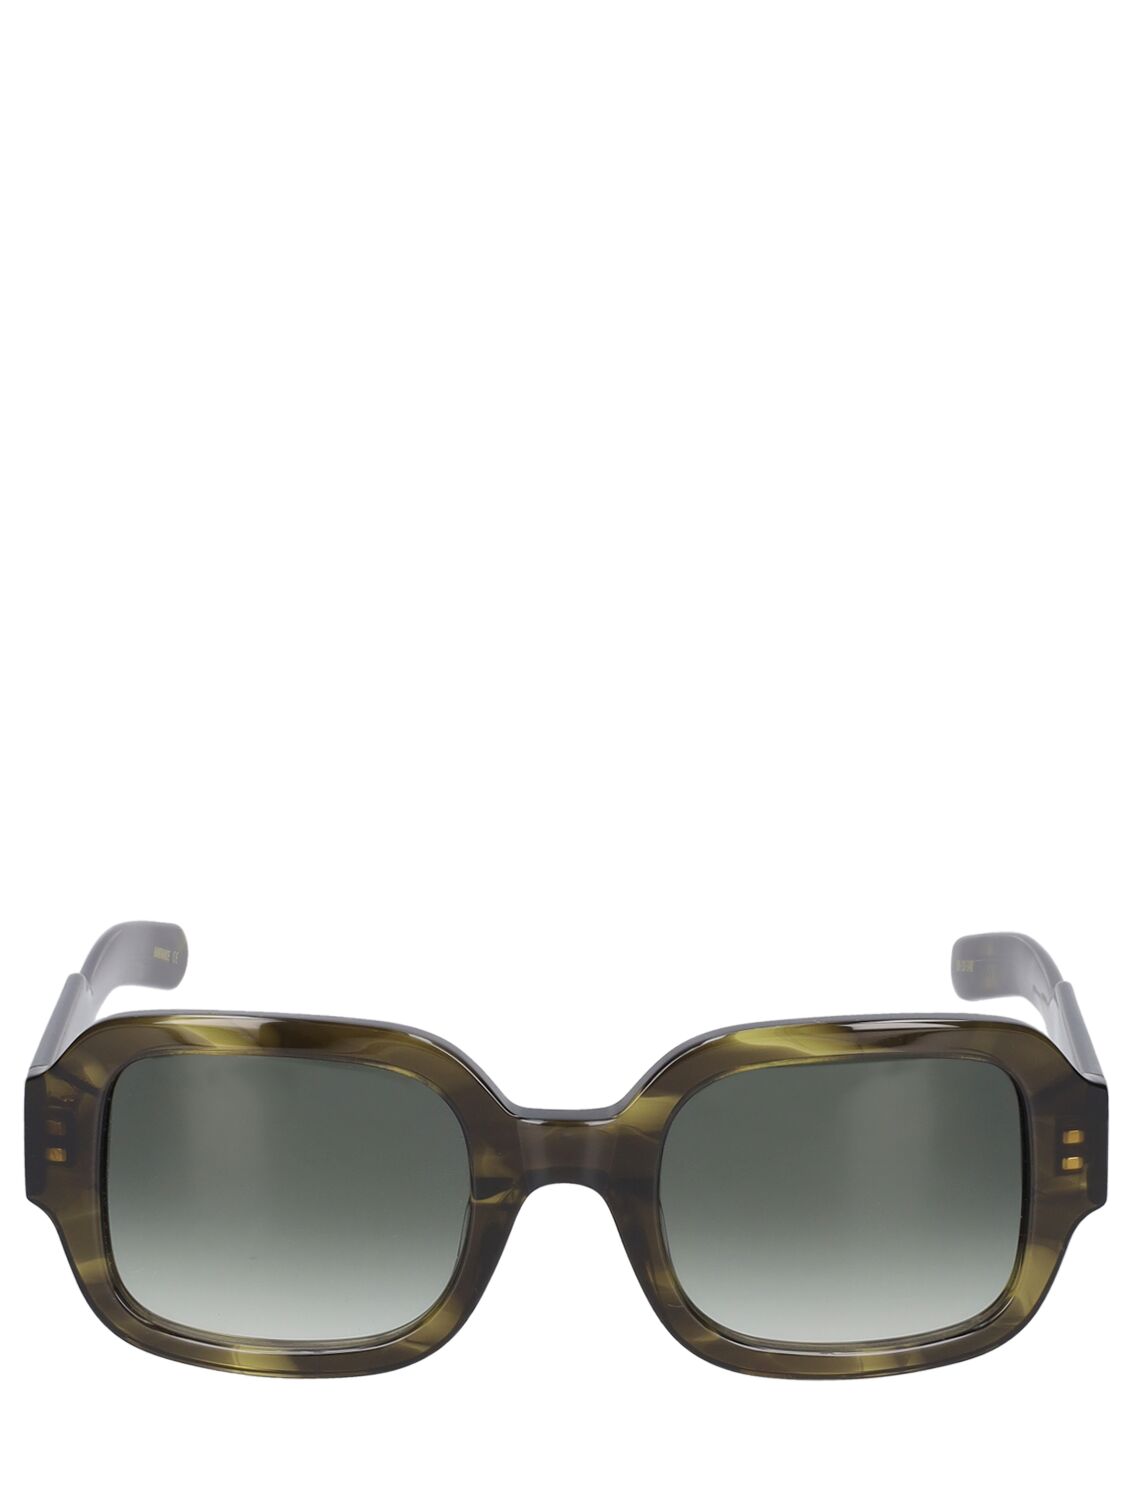 Flatlist Eyewear Tishkoff Sunglasses In Green